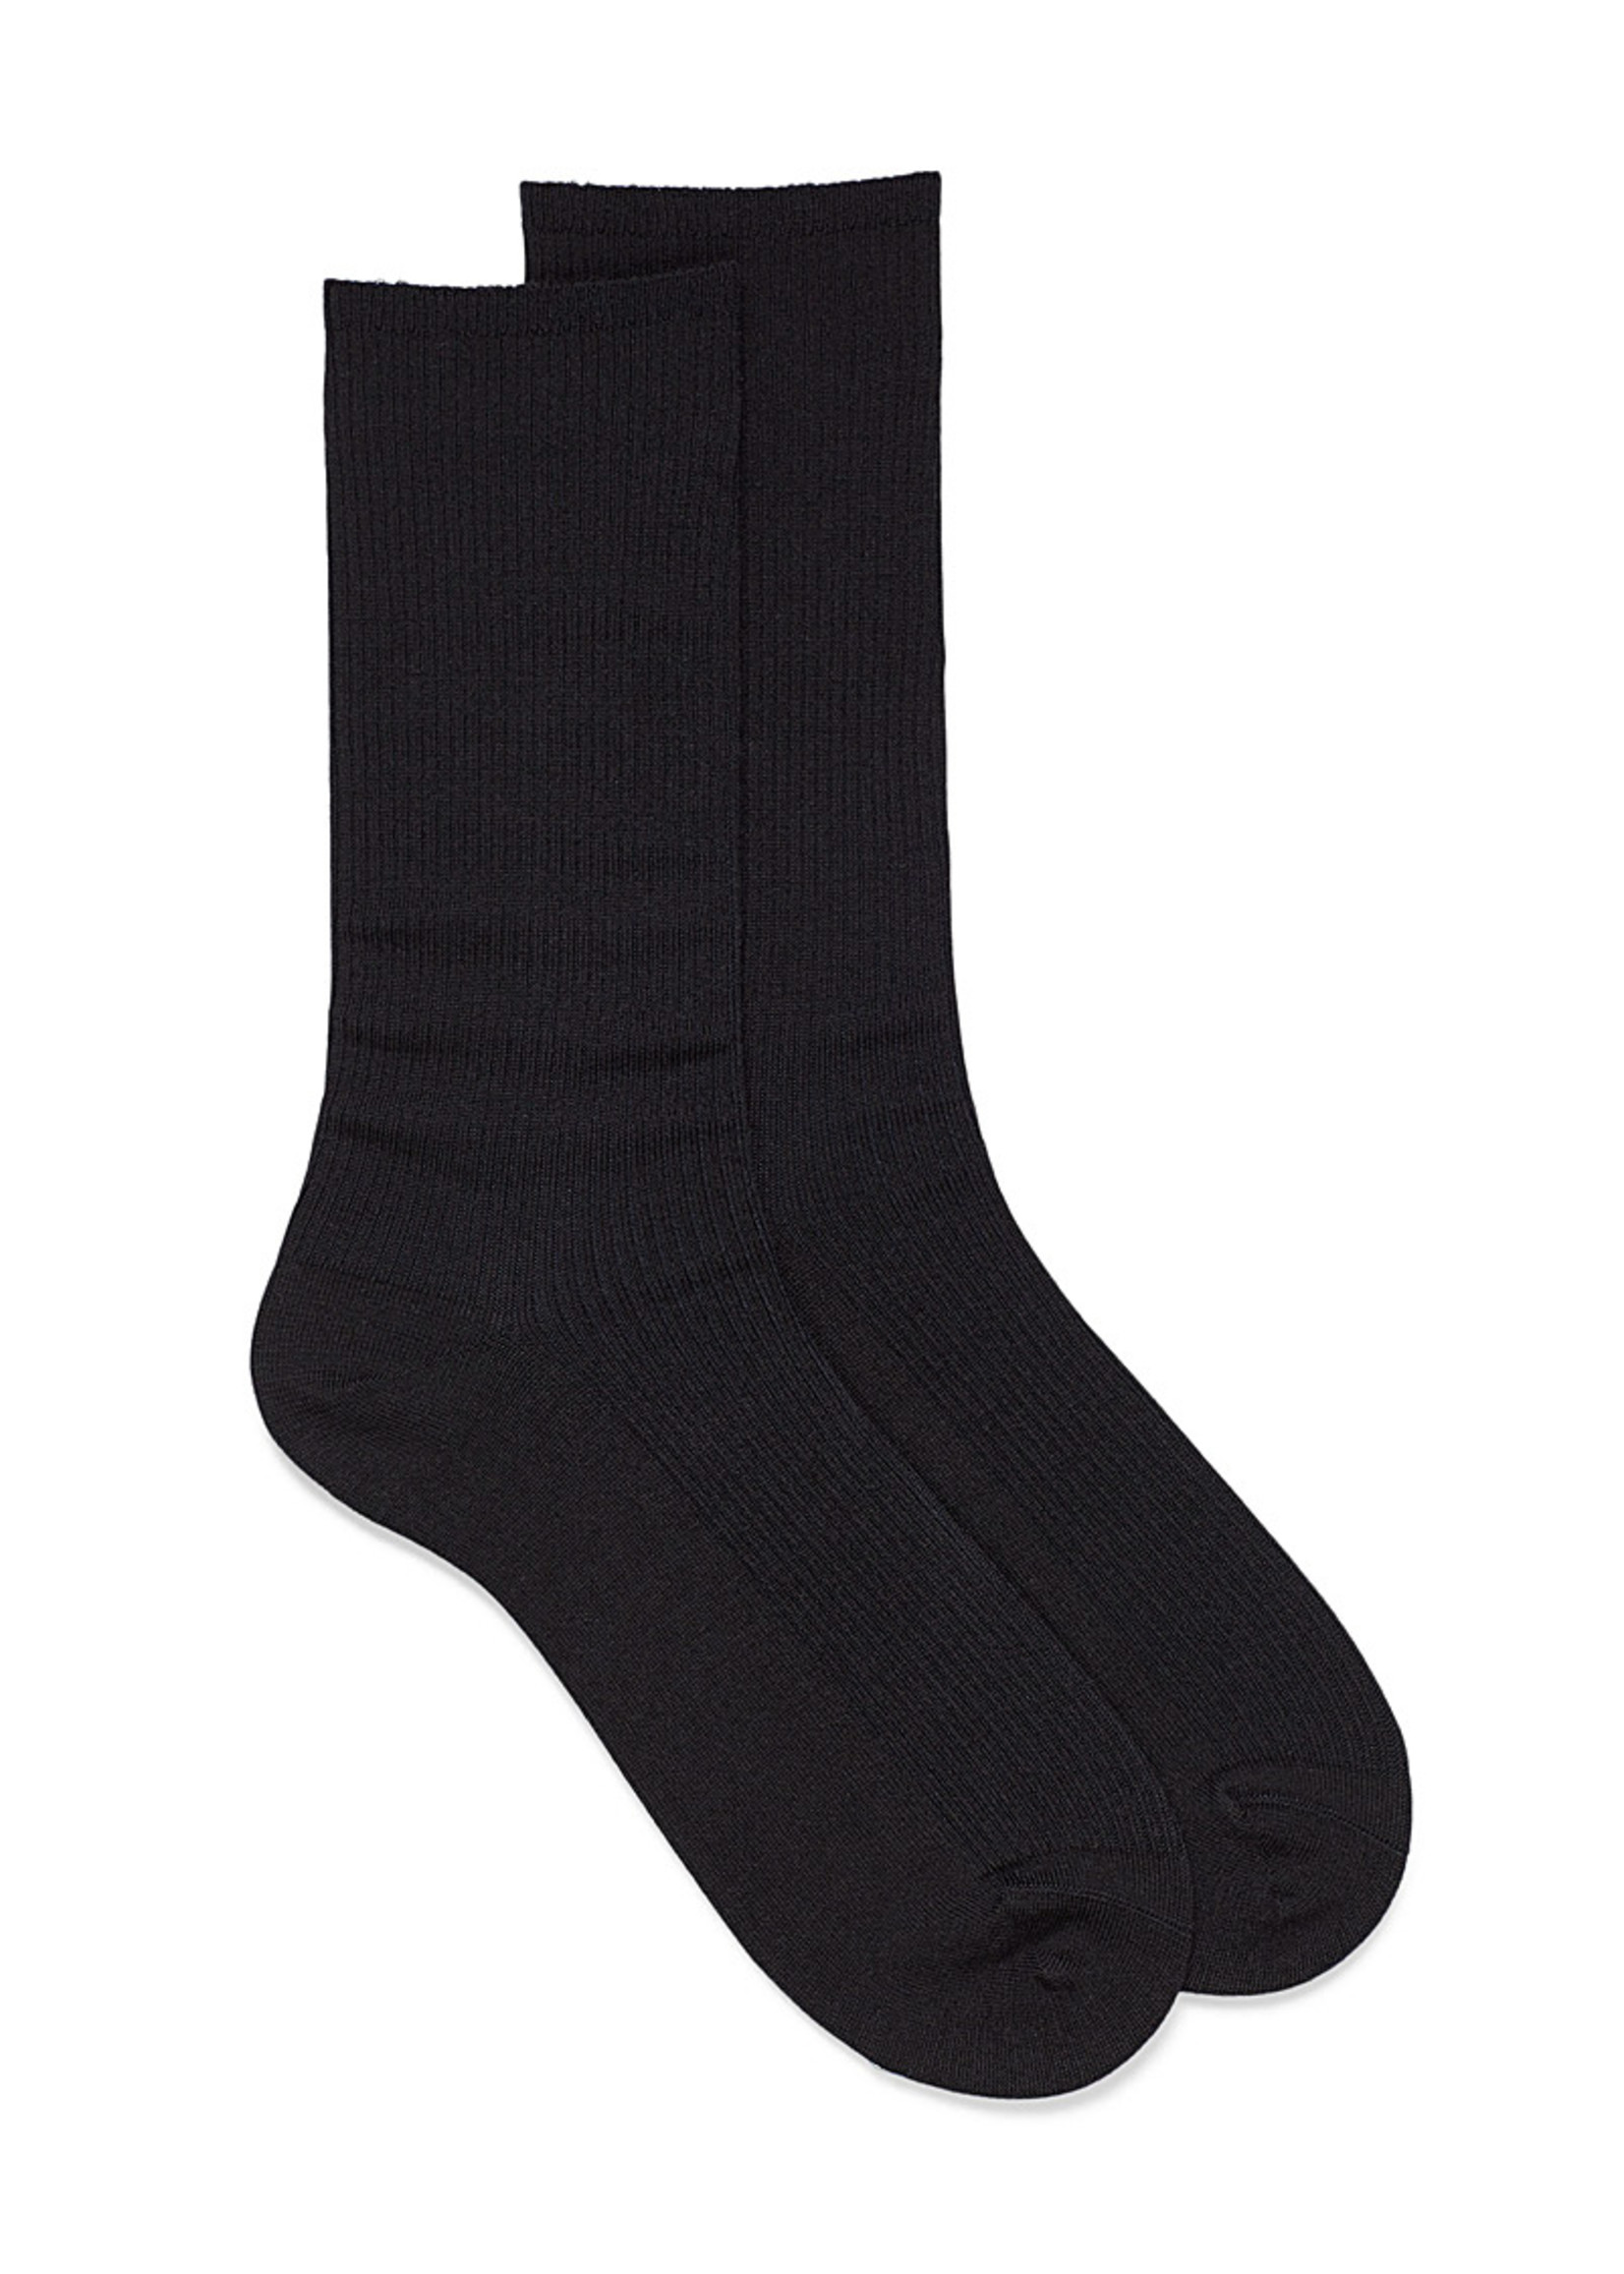 MCGREGOR Men's non-elastic socks